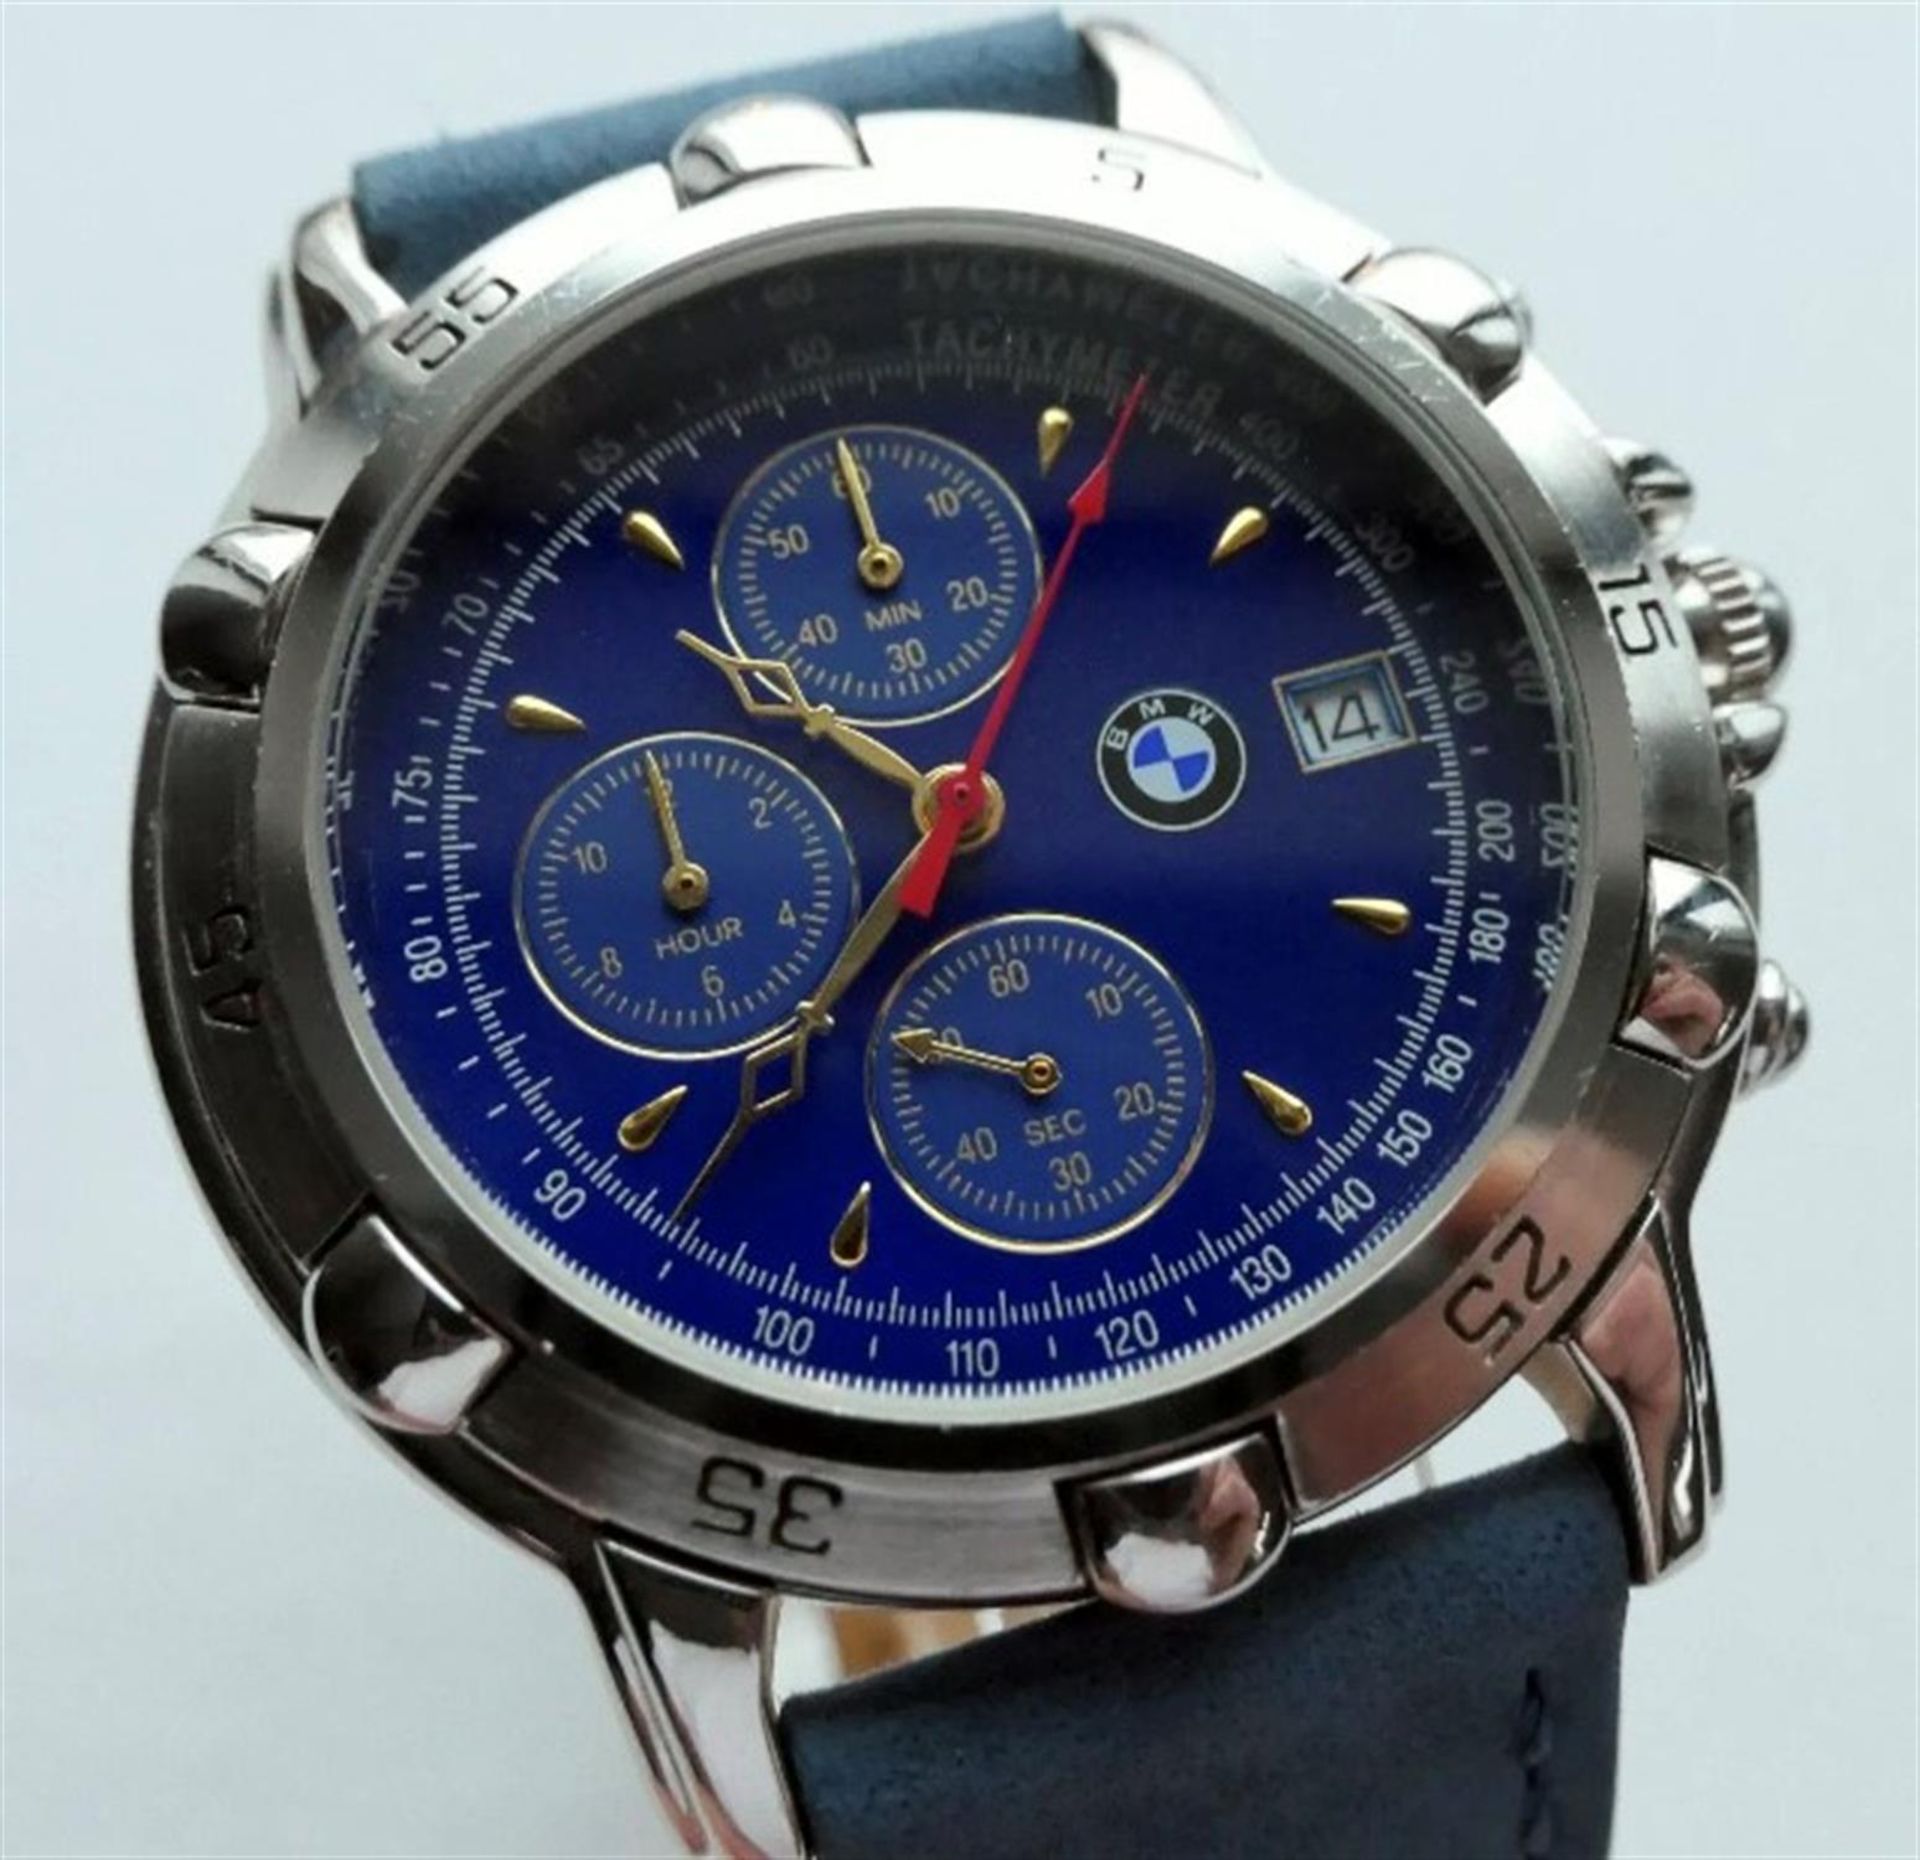 A Genuine And Rare BMW Chronograph Gentleman's Wrist Watch, C1990s. - Image 3 of 10